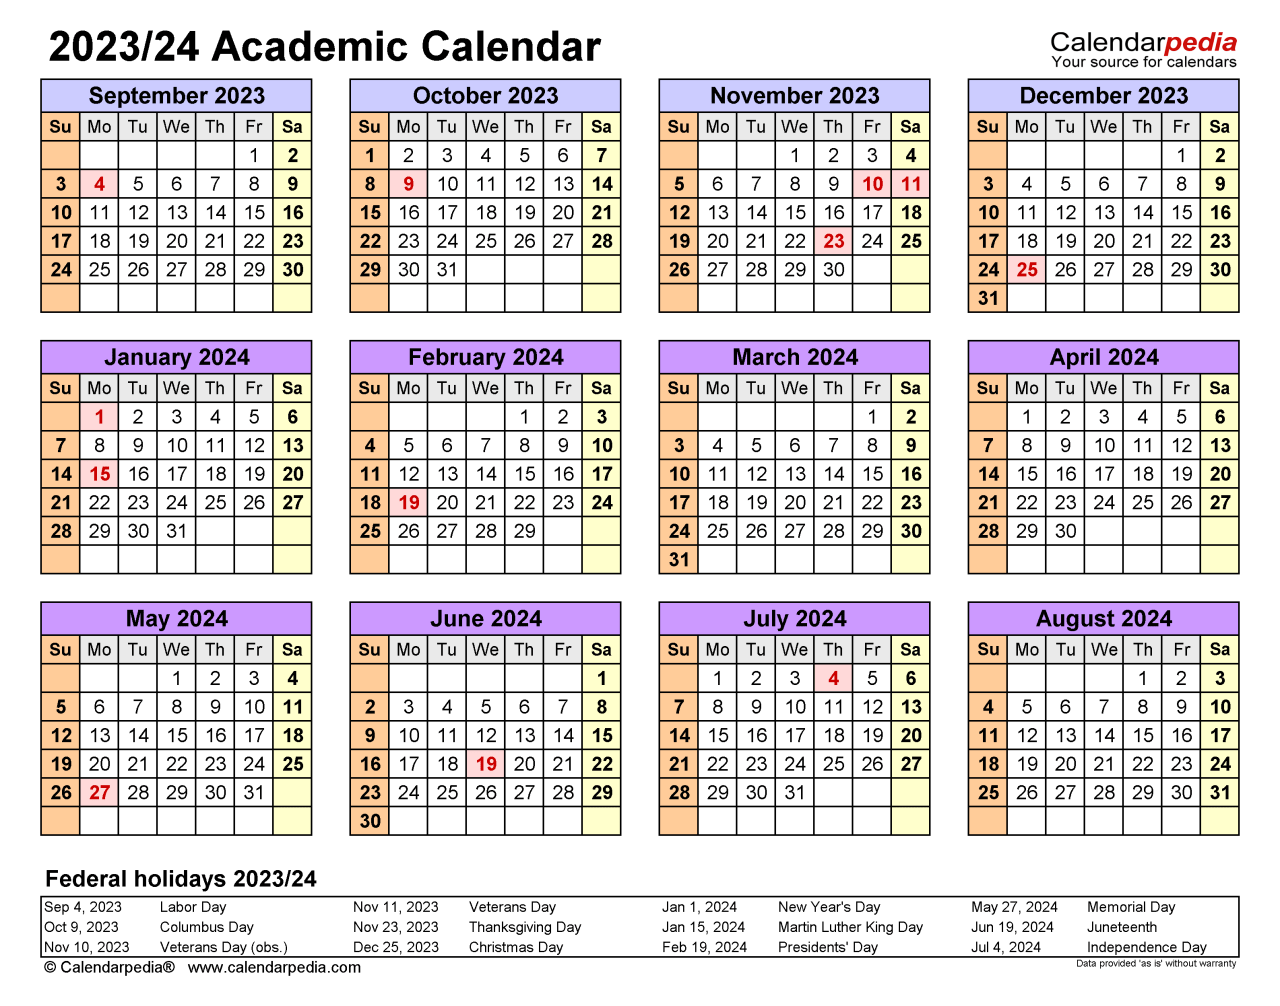 Academic Calendar Alert: St. George's University Term Dates 2023-2024 Released
